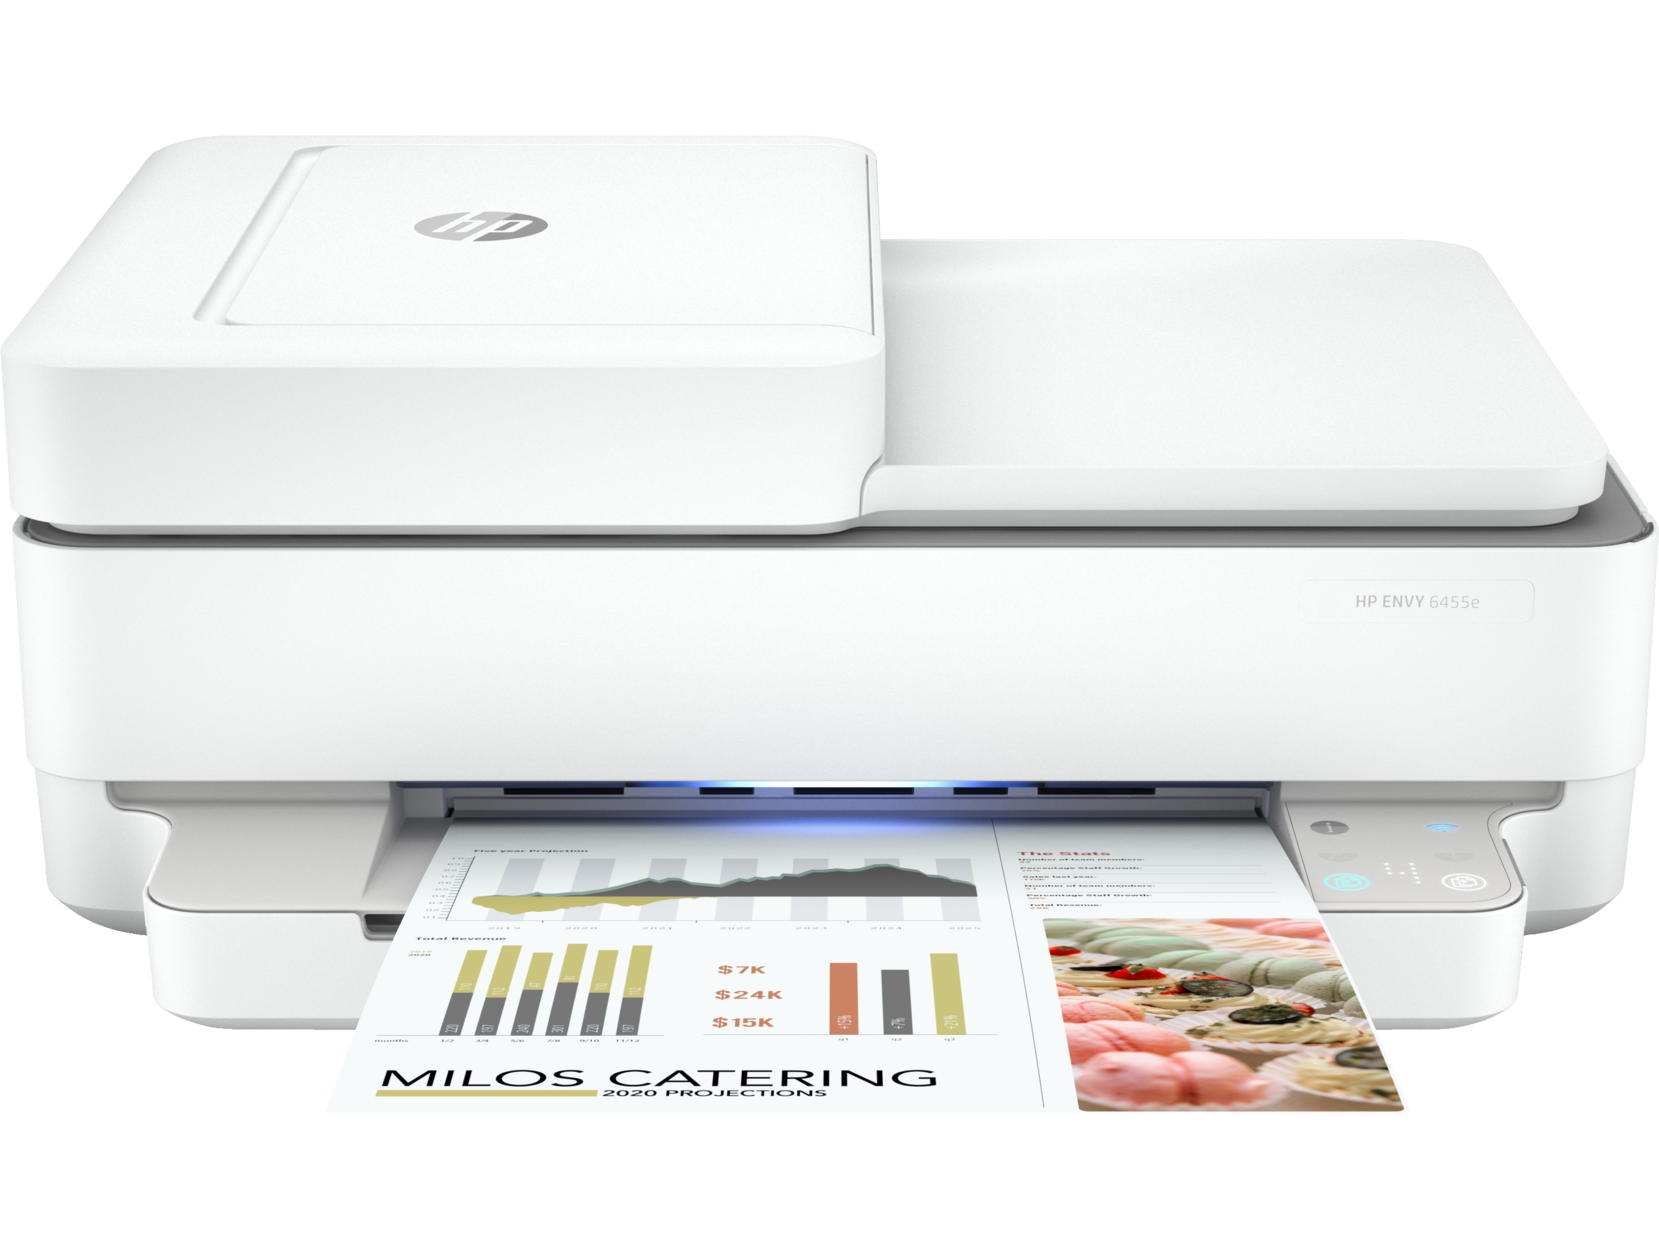 HP ENVY 6455e All-in-One Inkjet Printer, Color Mobile Print, Copy, Scan, Send - image 1 of 7